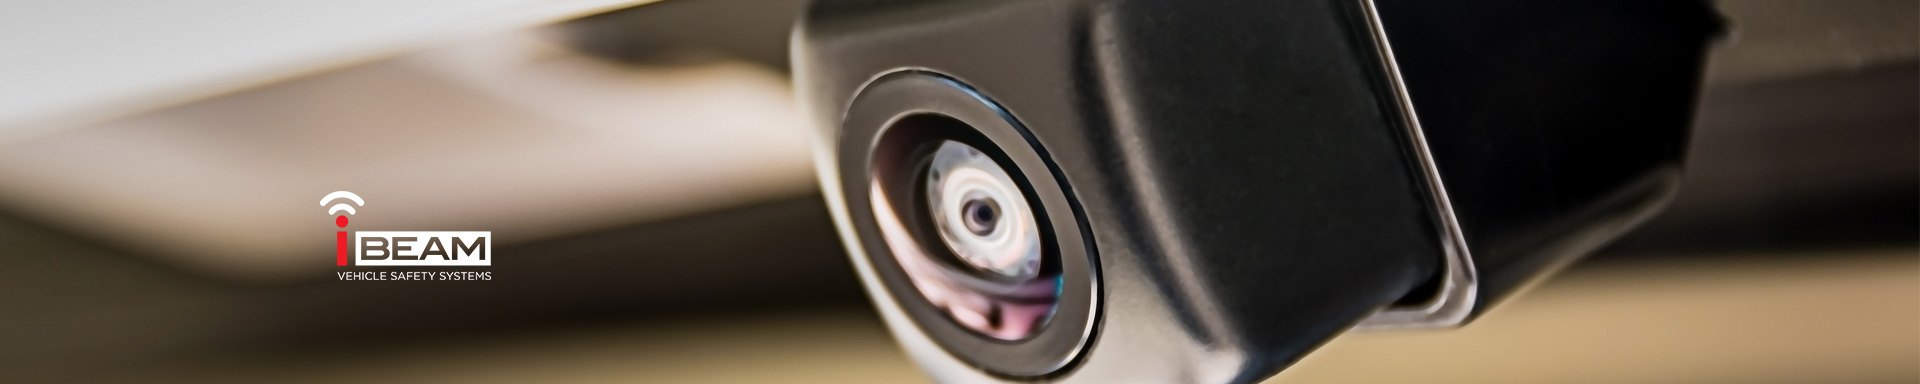 iBeam Cameras & Driver Safety